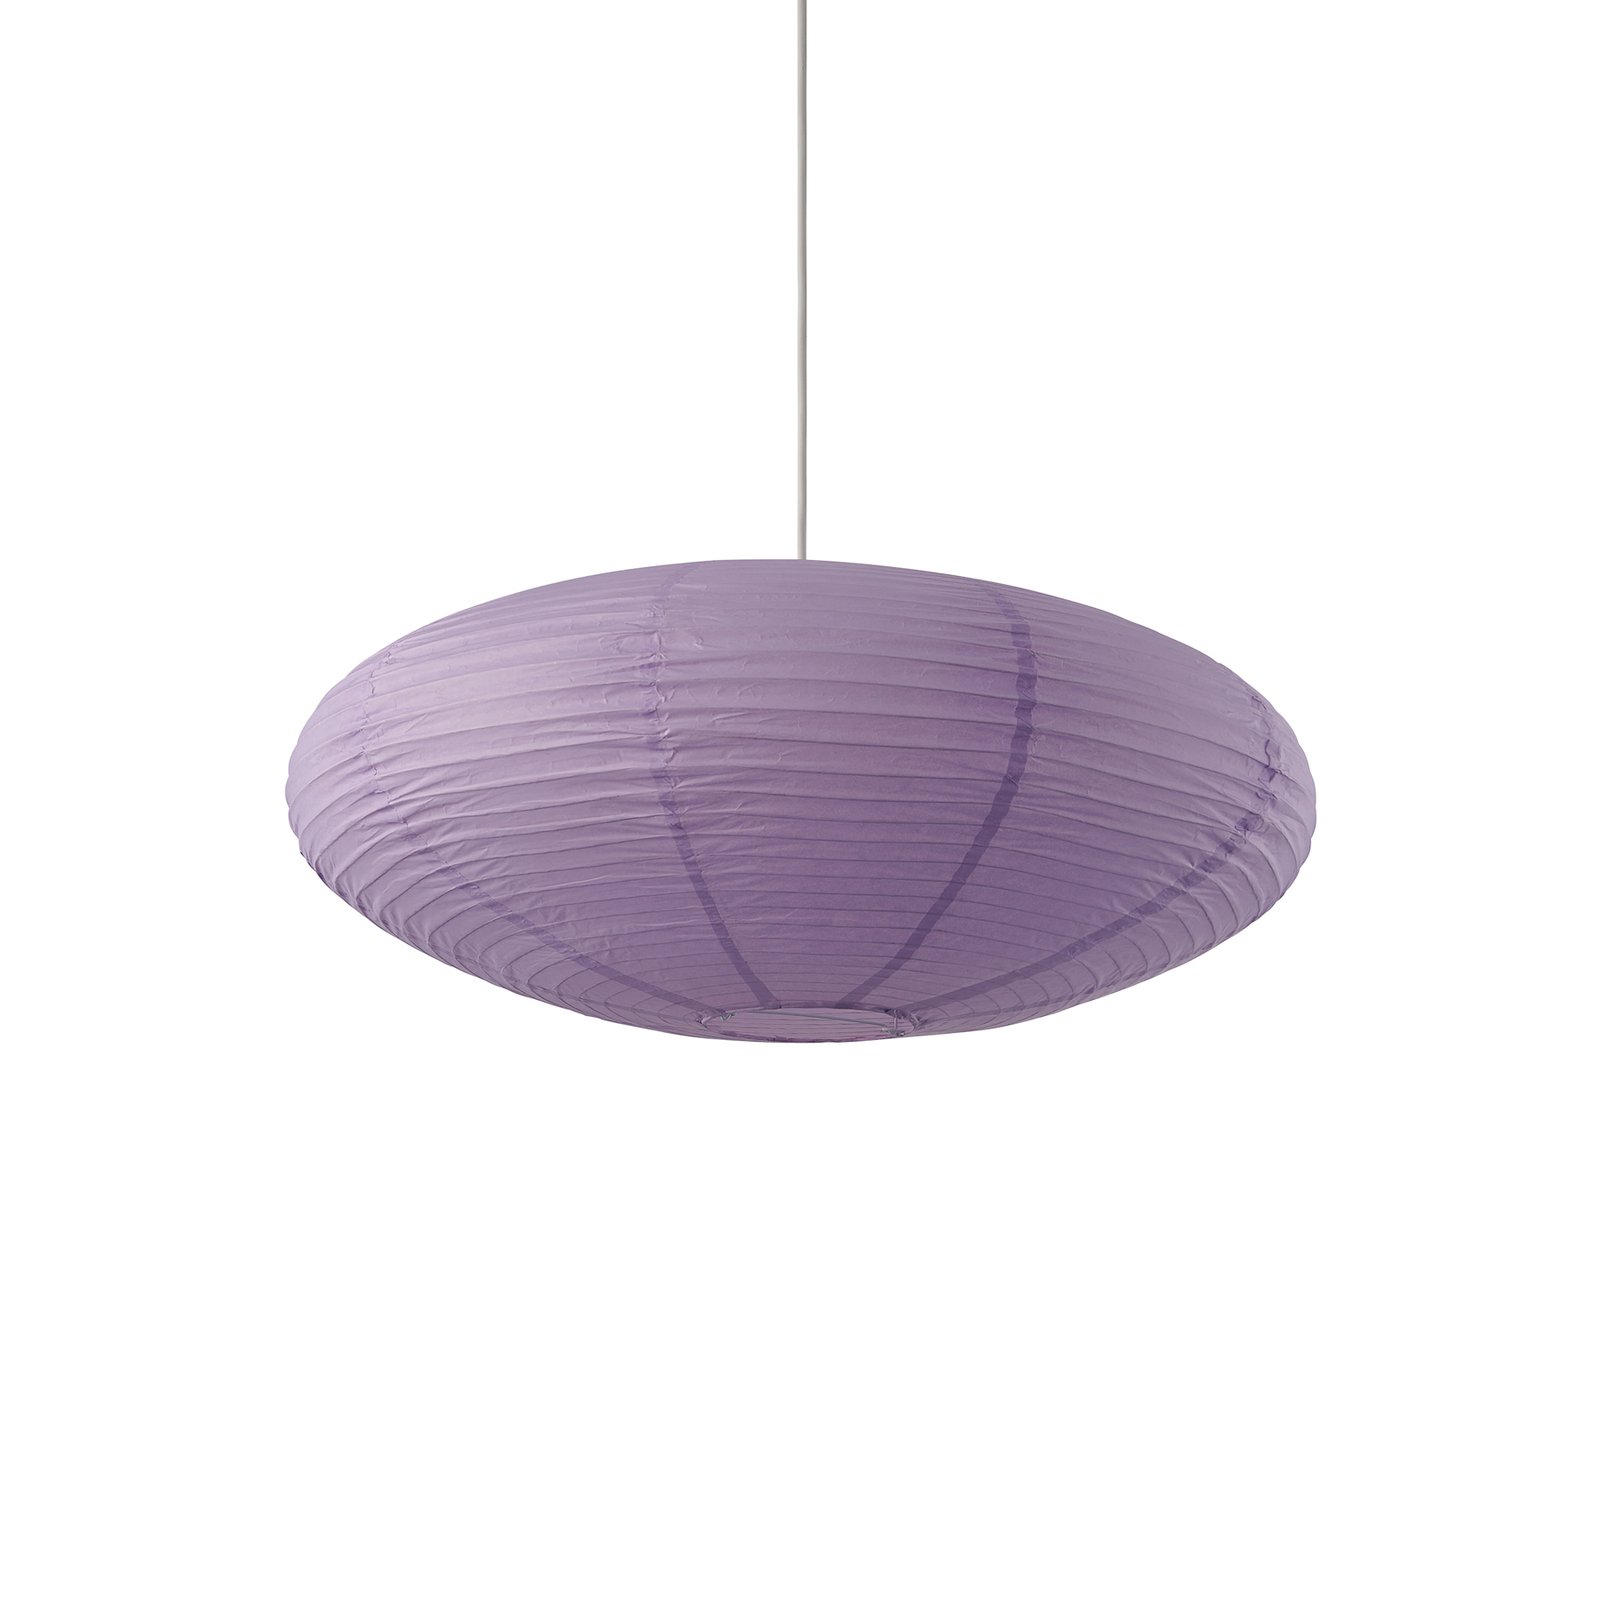 Villo 60 paper lampshade Ø 60cm height 25cm, purple